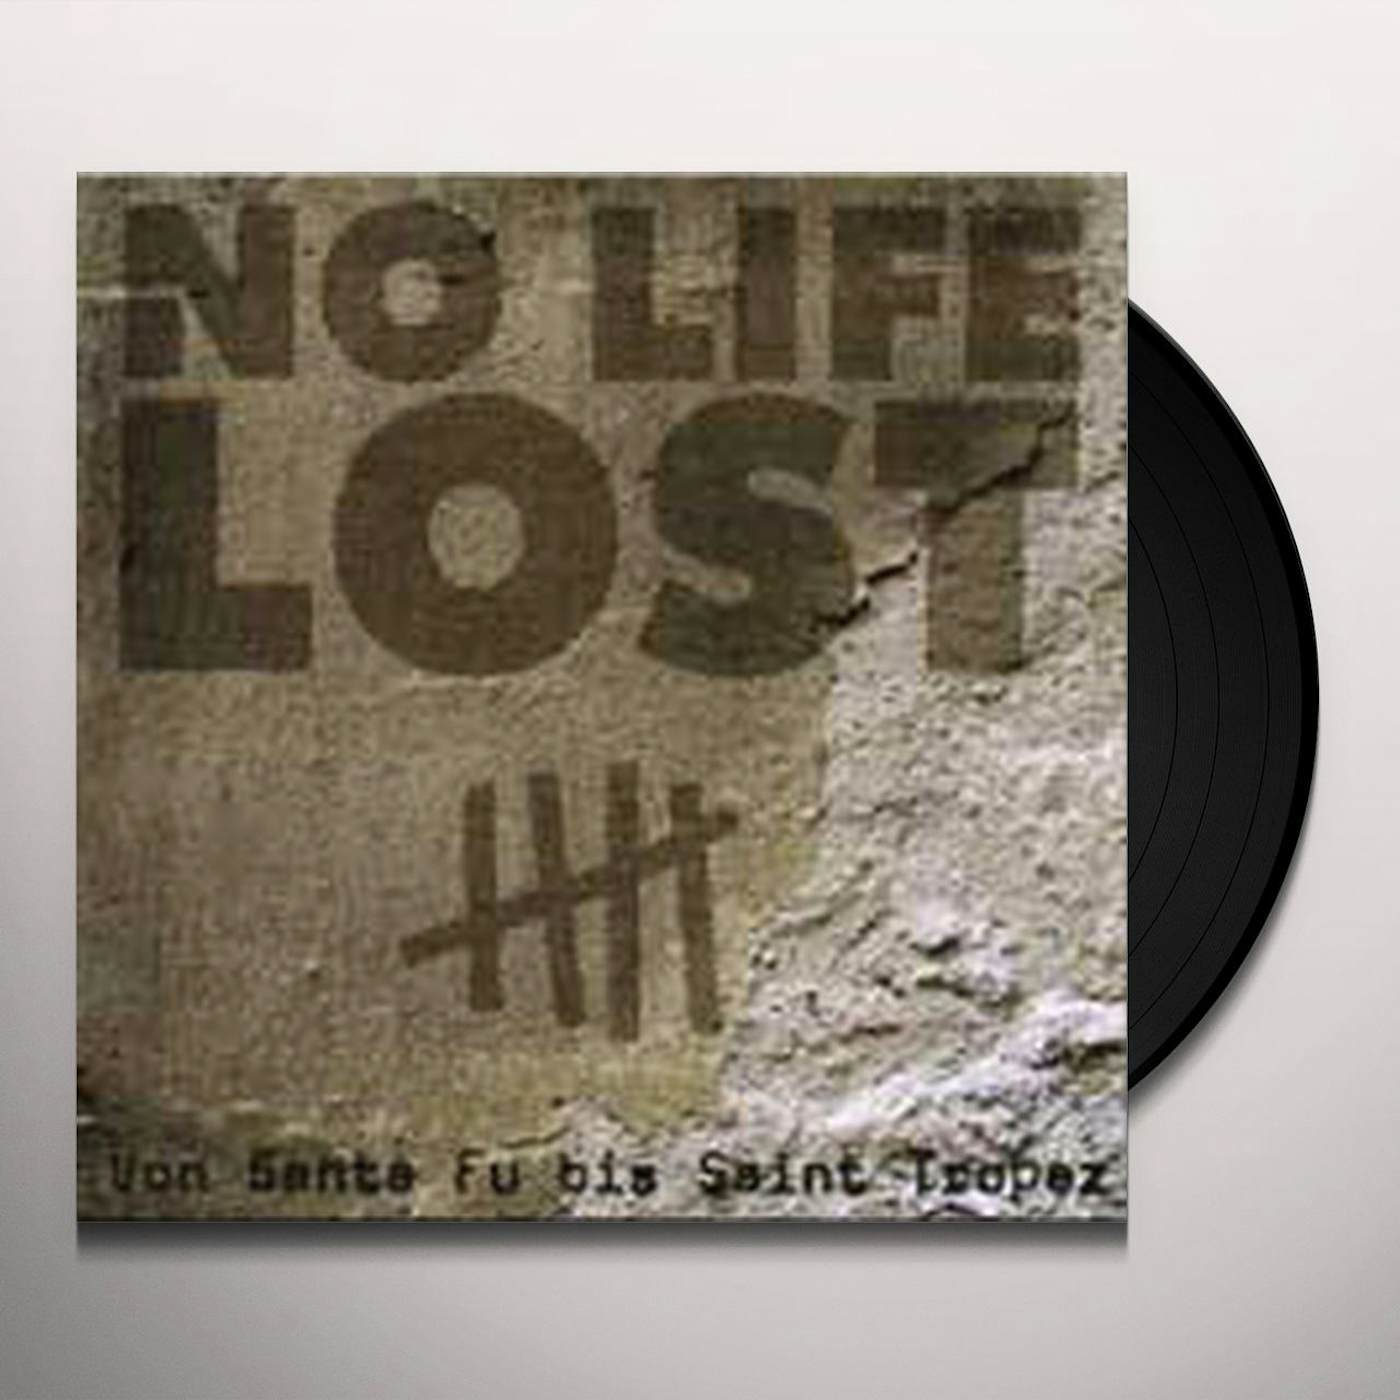 No Life Lost VON SANTA FU BIS ST.TR Vinyl Record